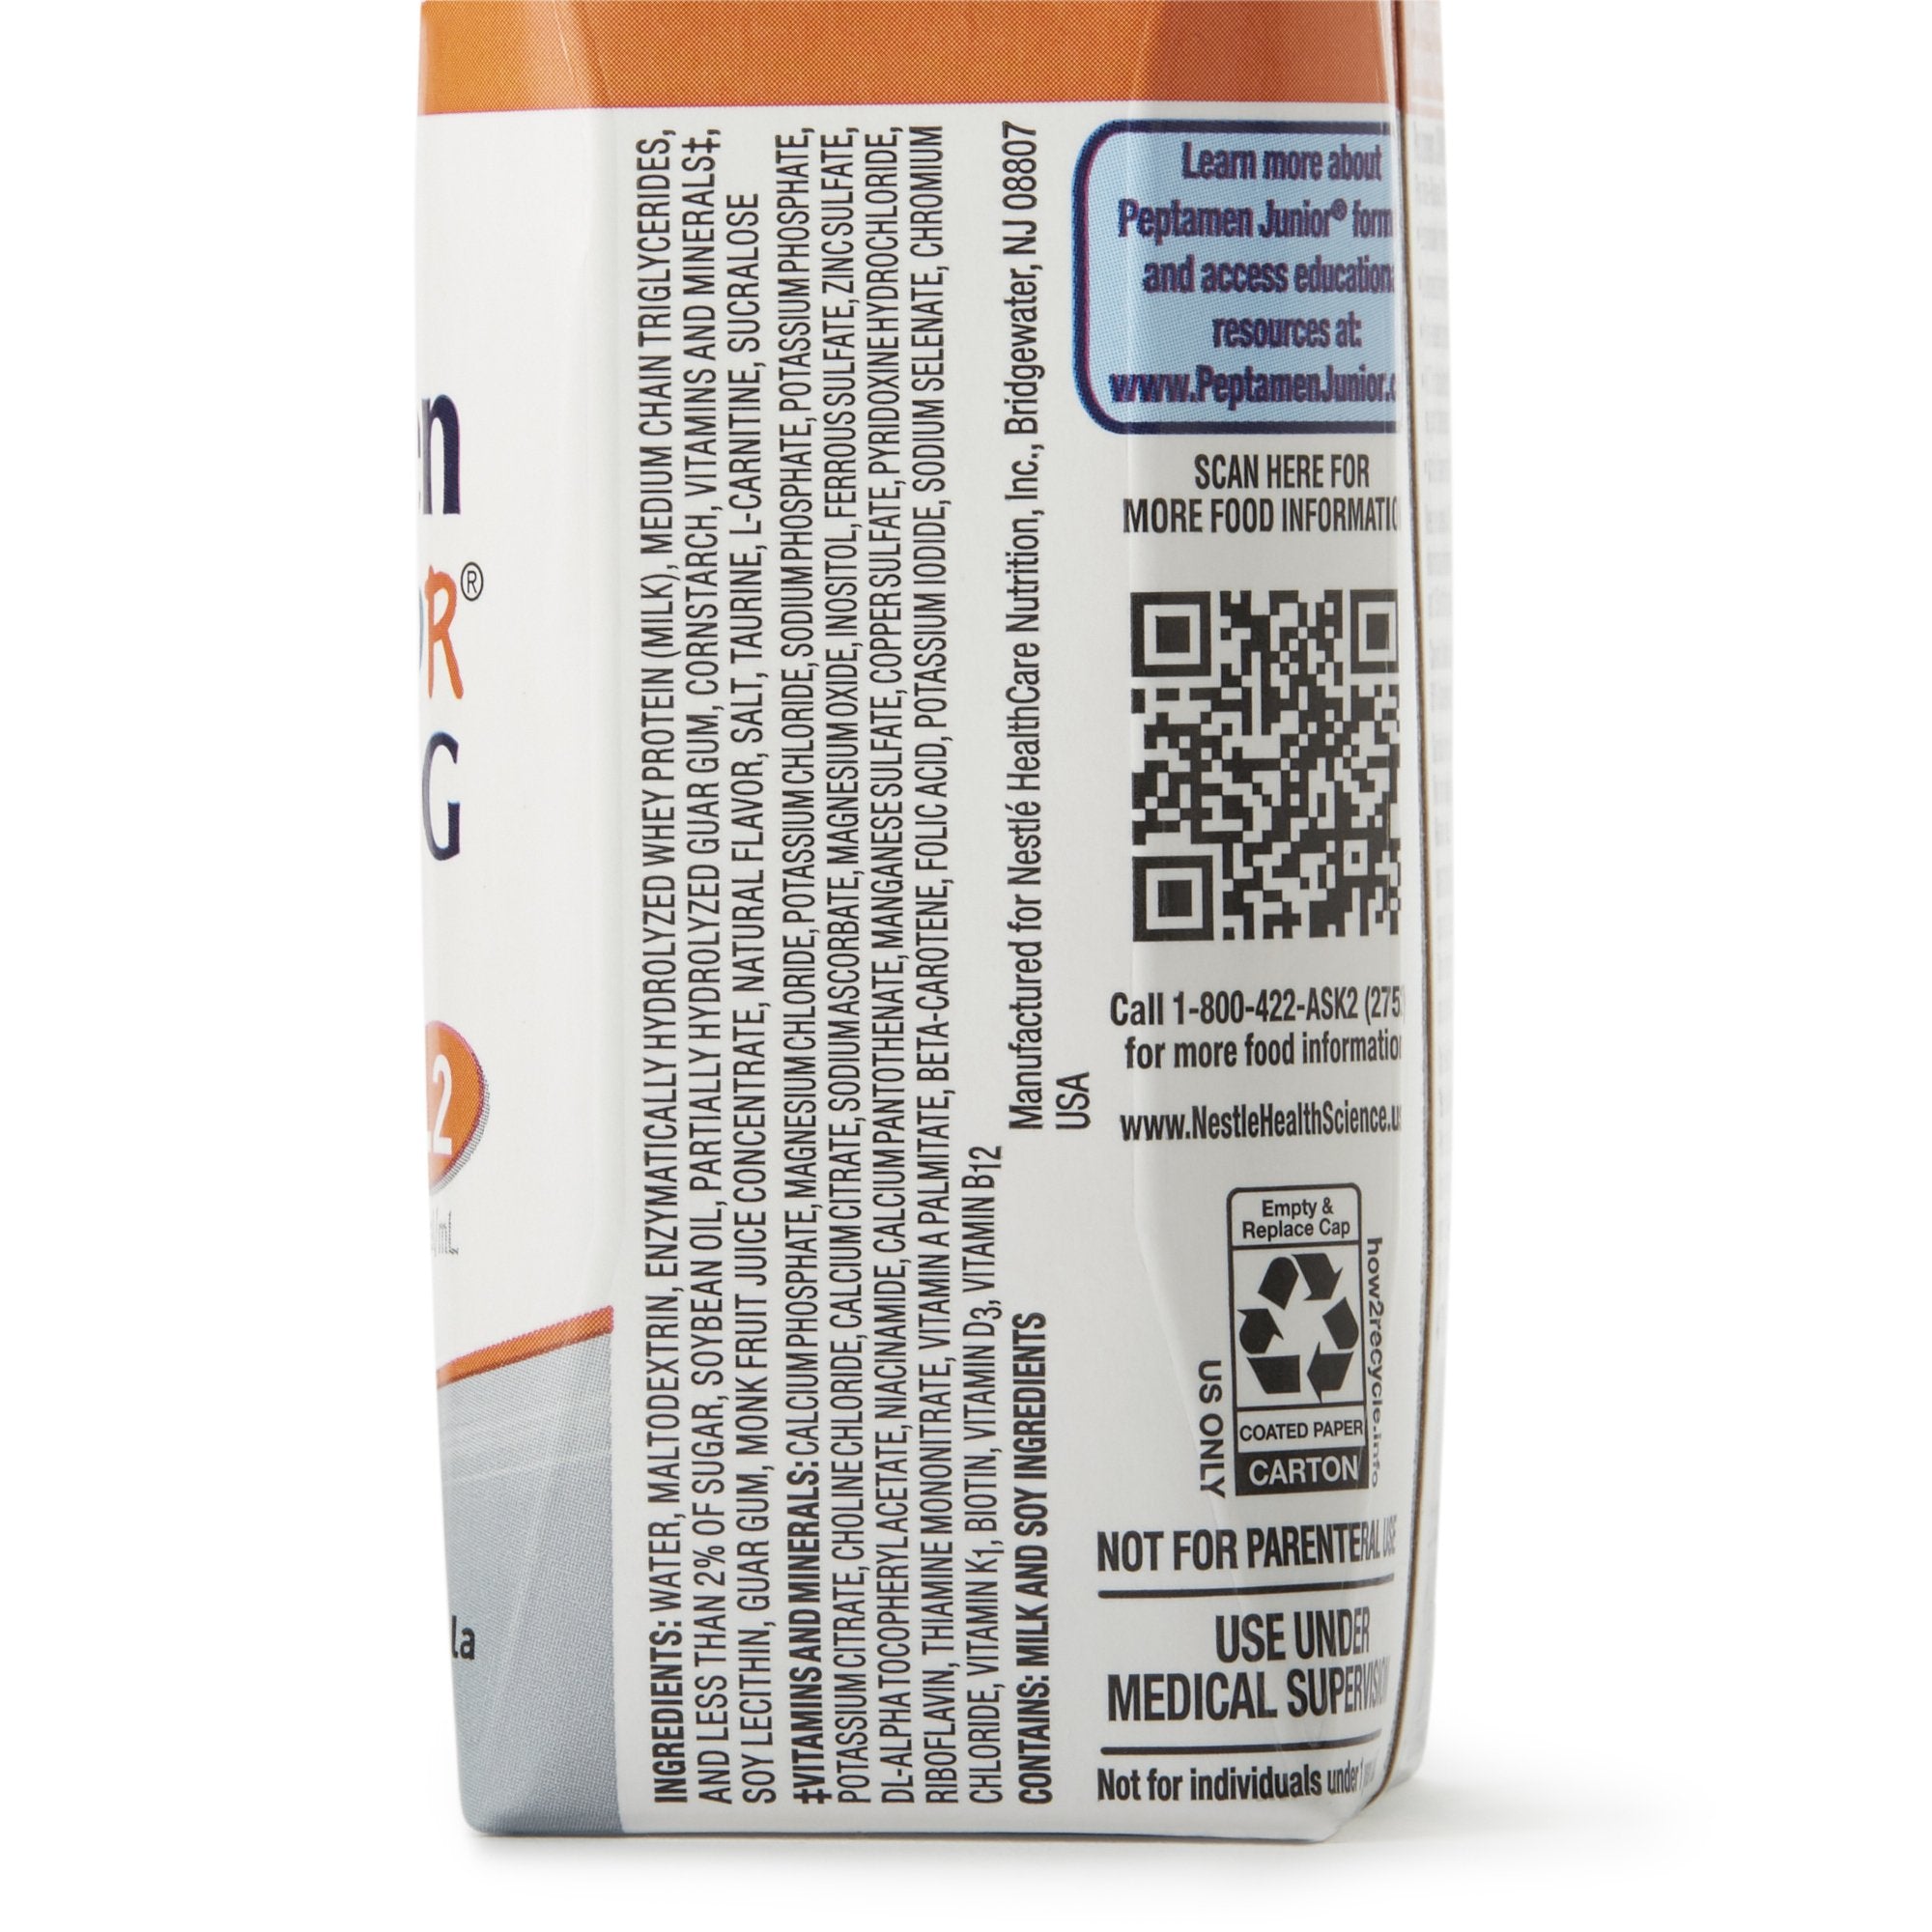 Peptamen Junior® PHGG Vanilla Pediatric Oral Supplement / Tube Feeding Formula, 8.45 oz. Carton (1 Unit)